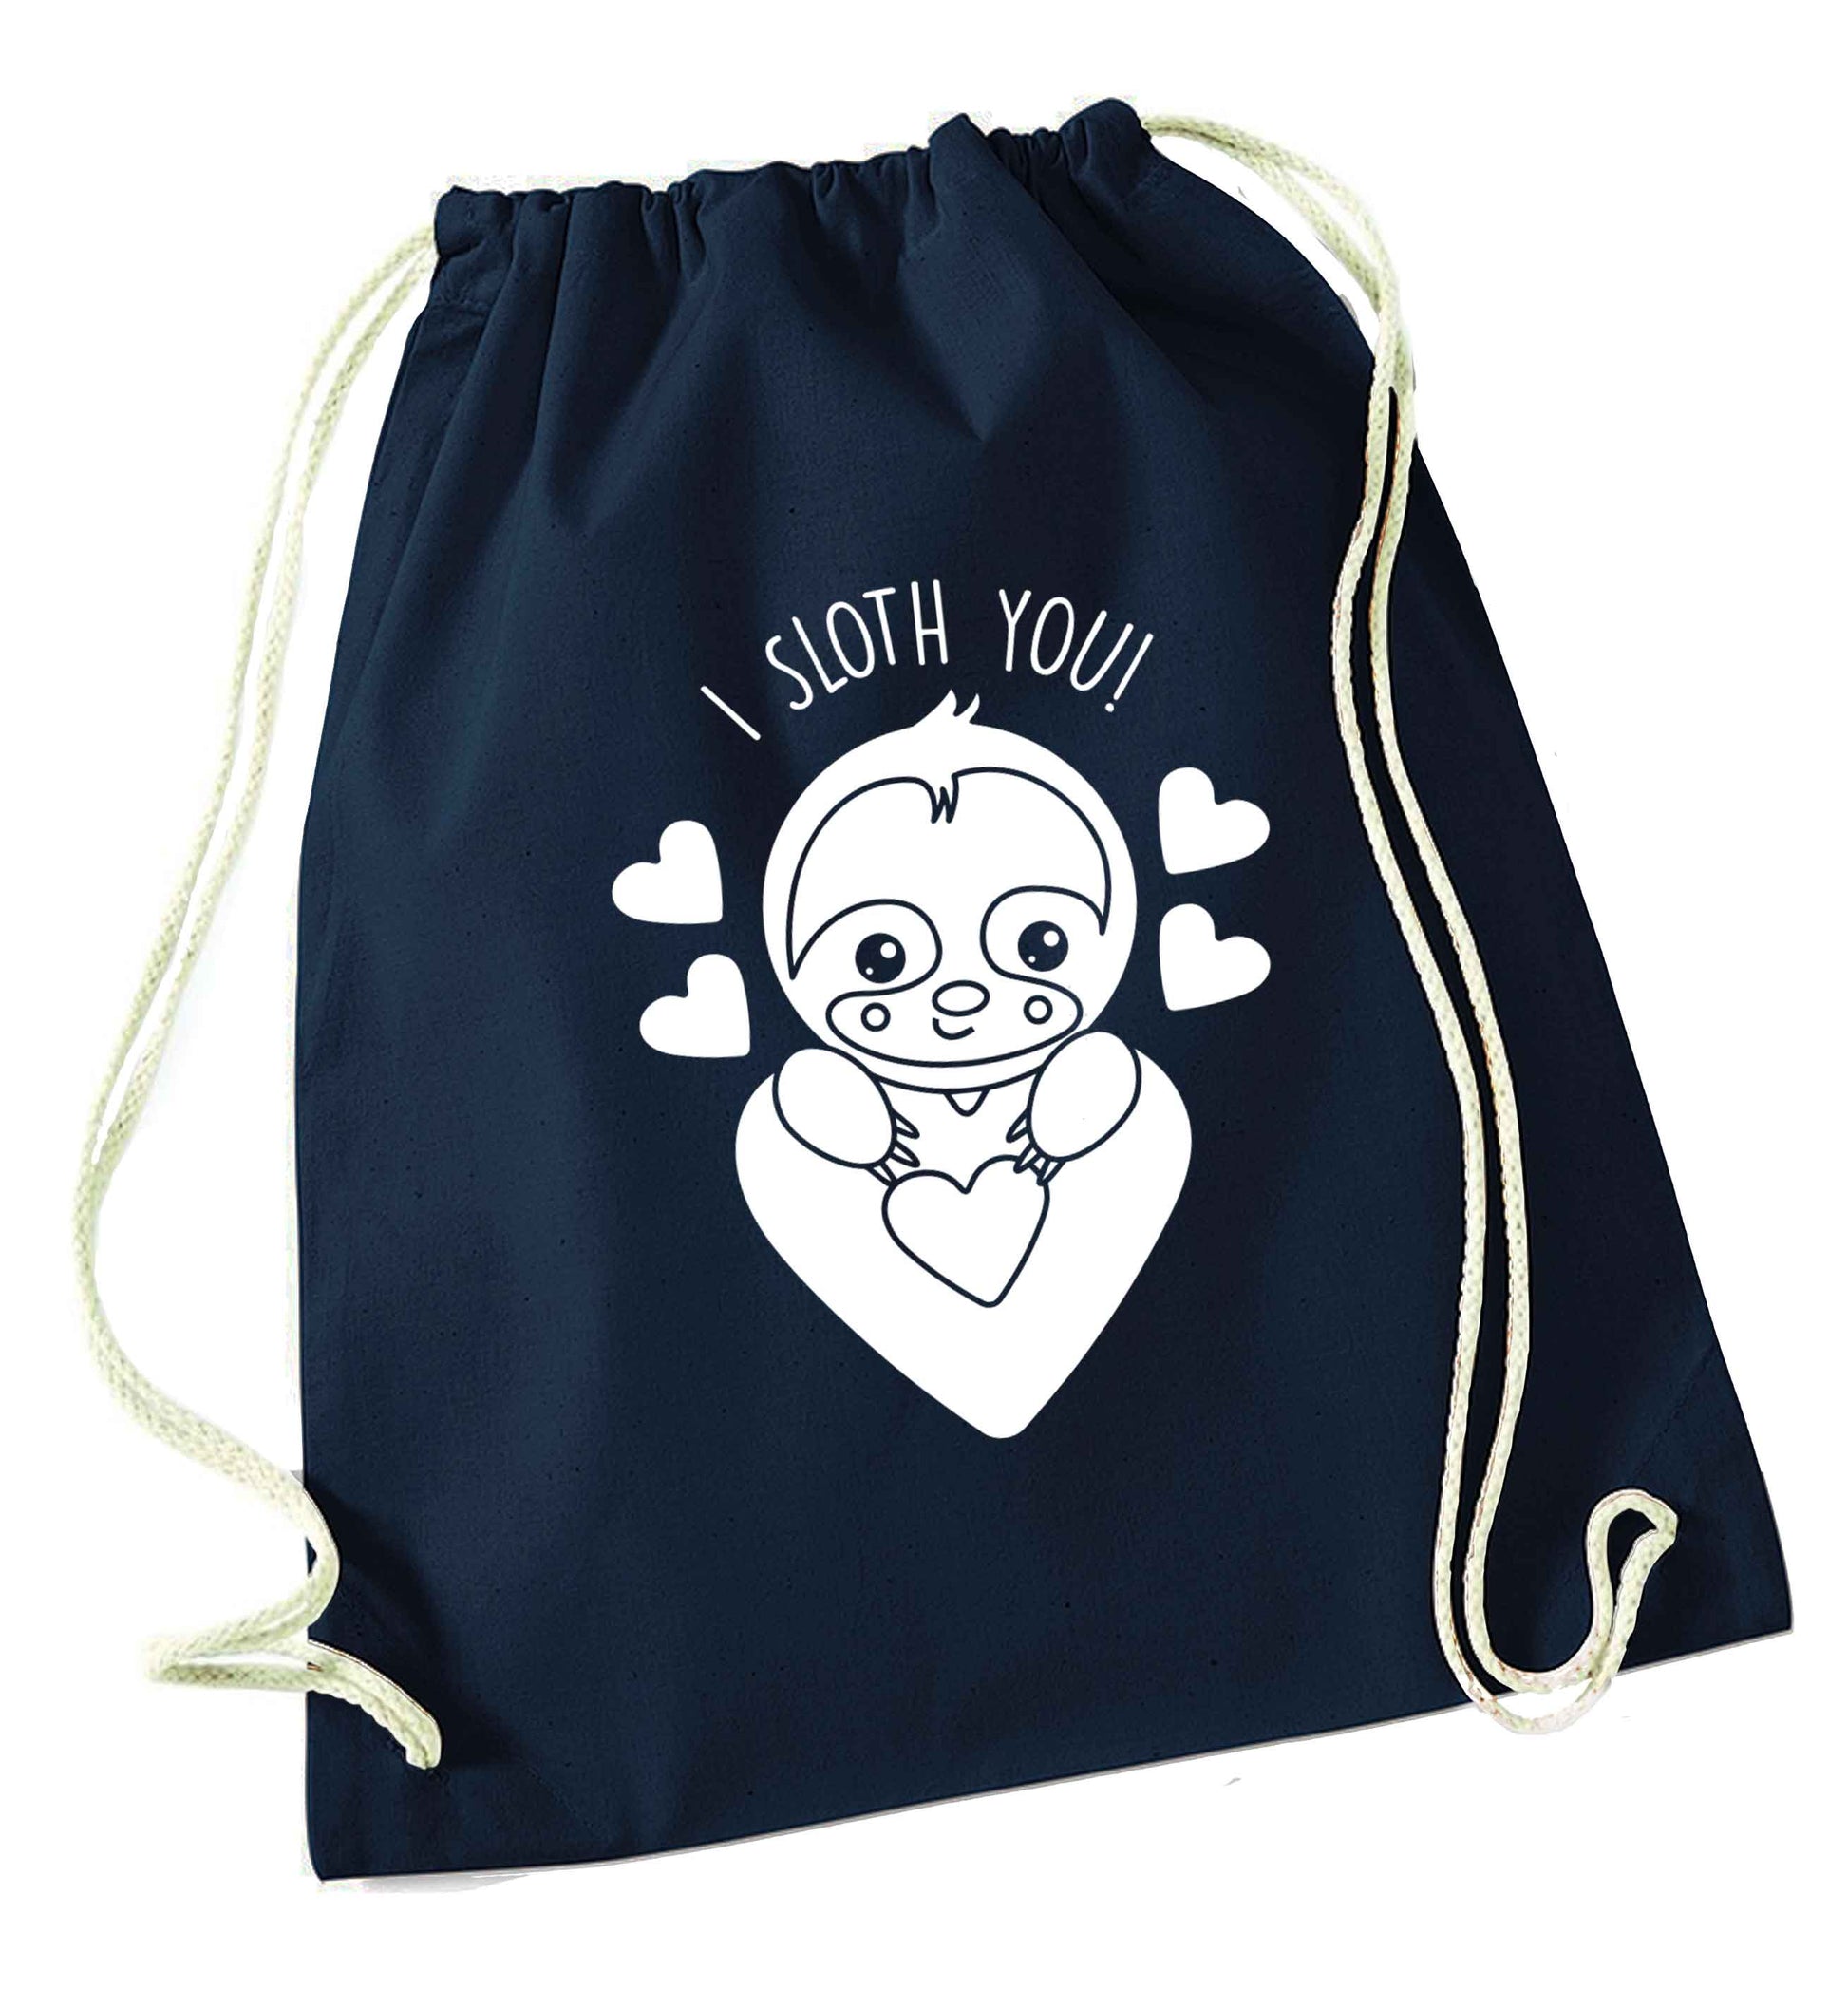 I sloth you navy drawstring bag